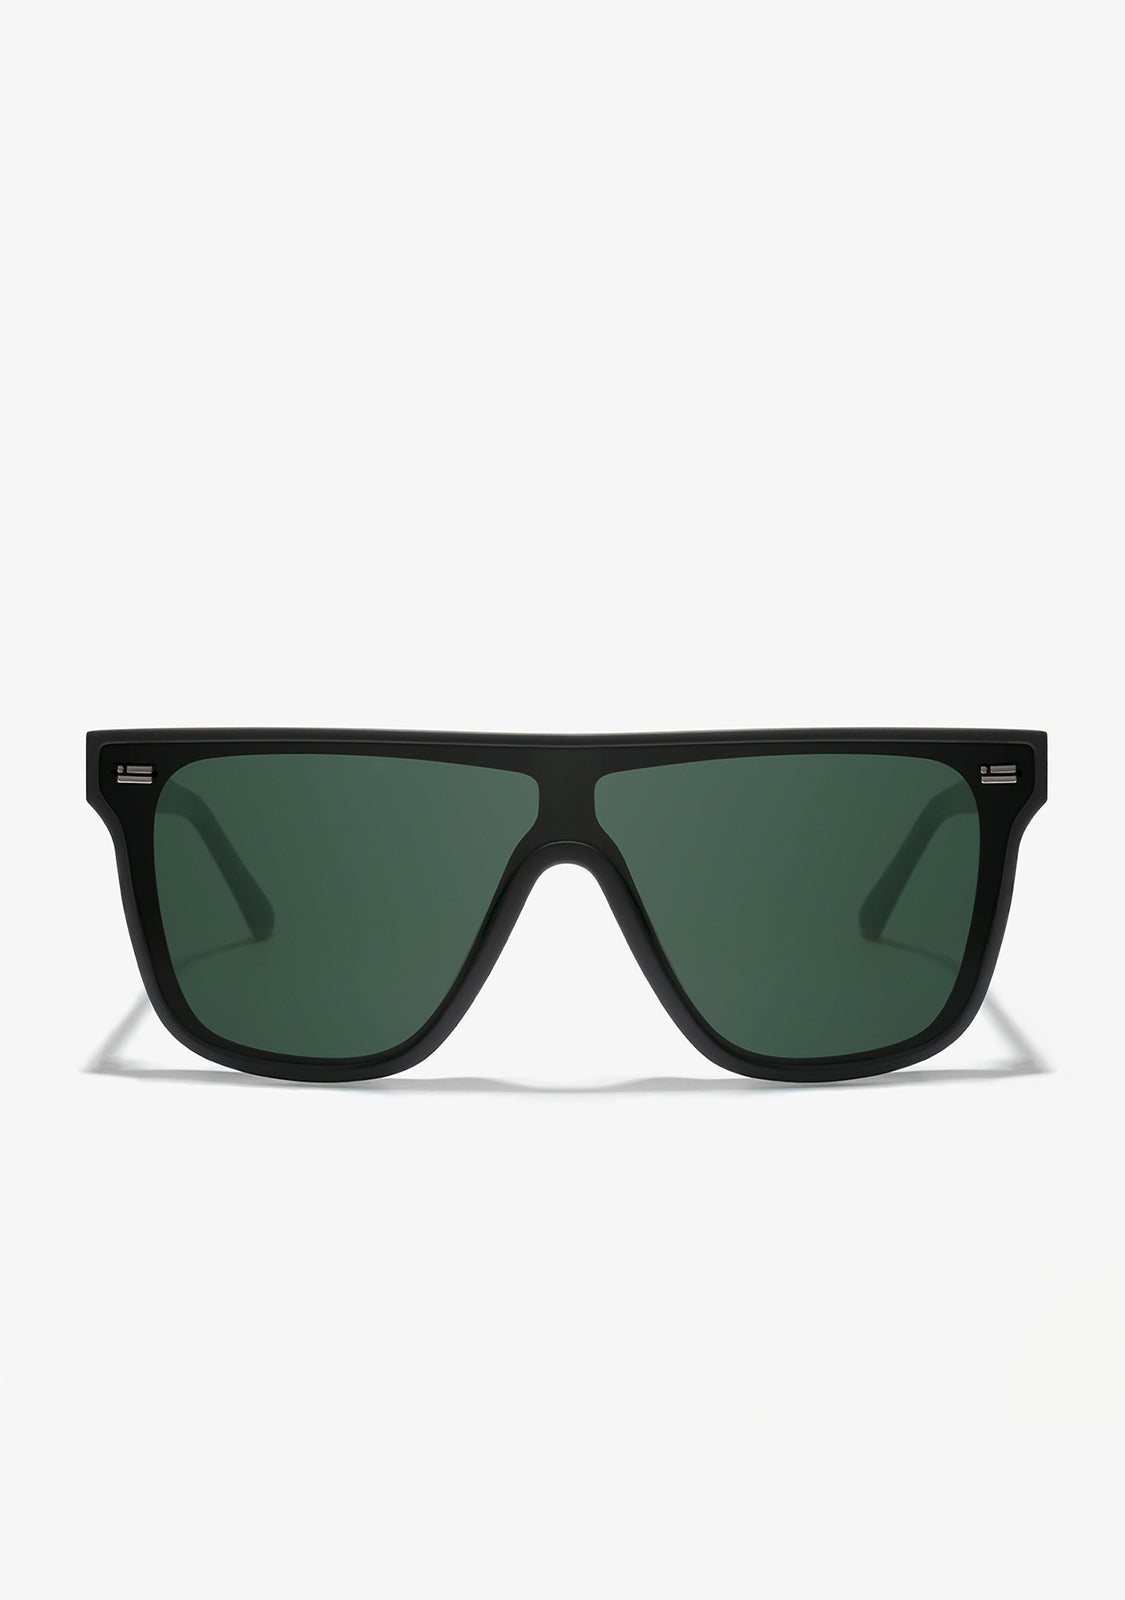 2x1 D.Franklin Sunglasses - Infinity Matte Black / G15